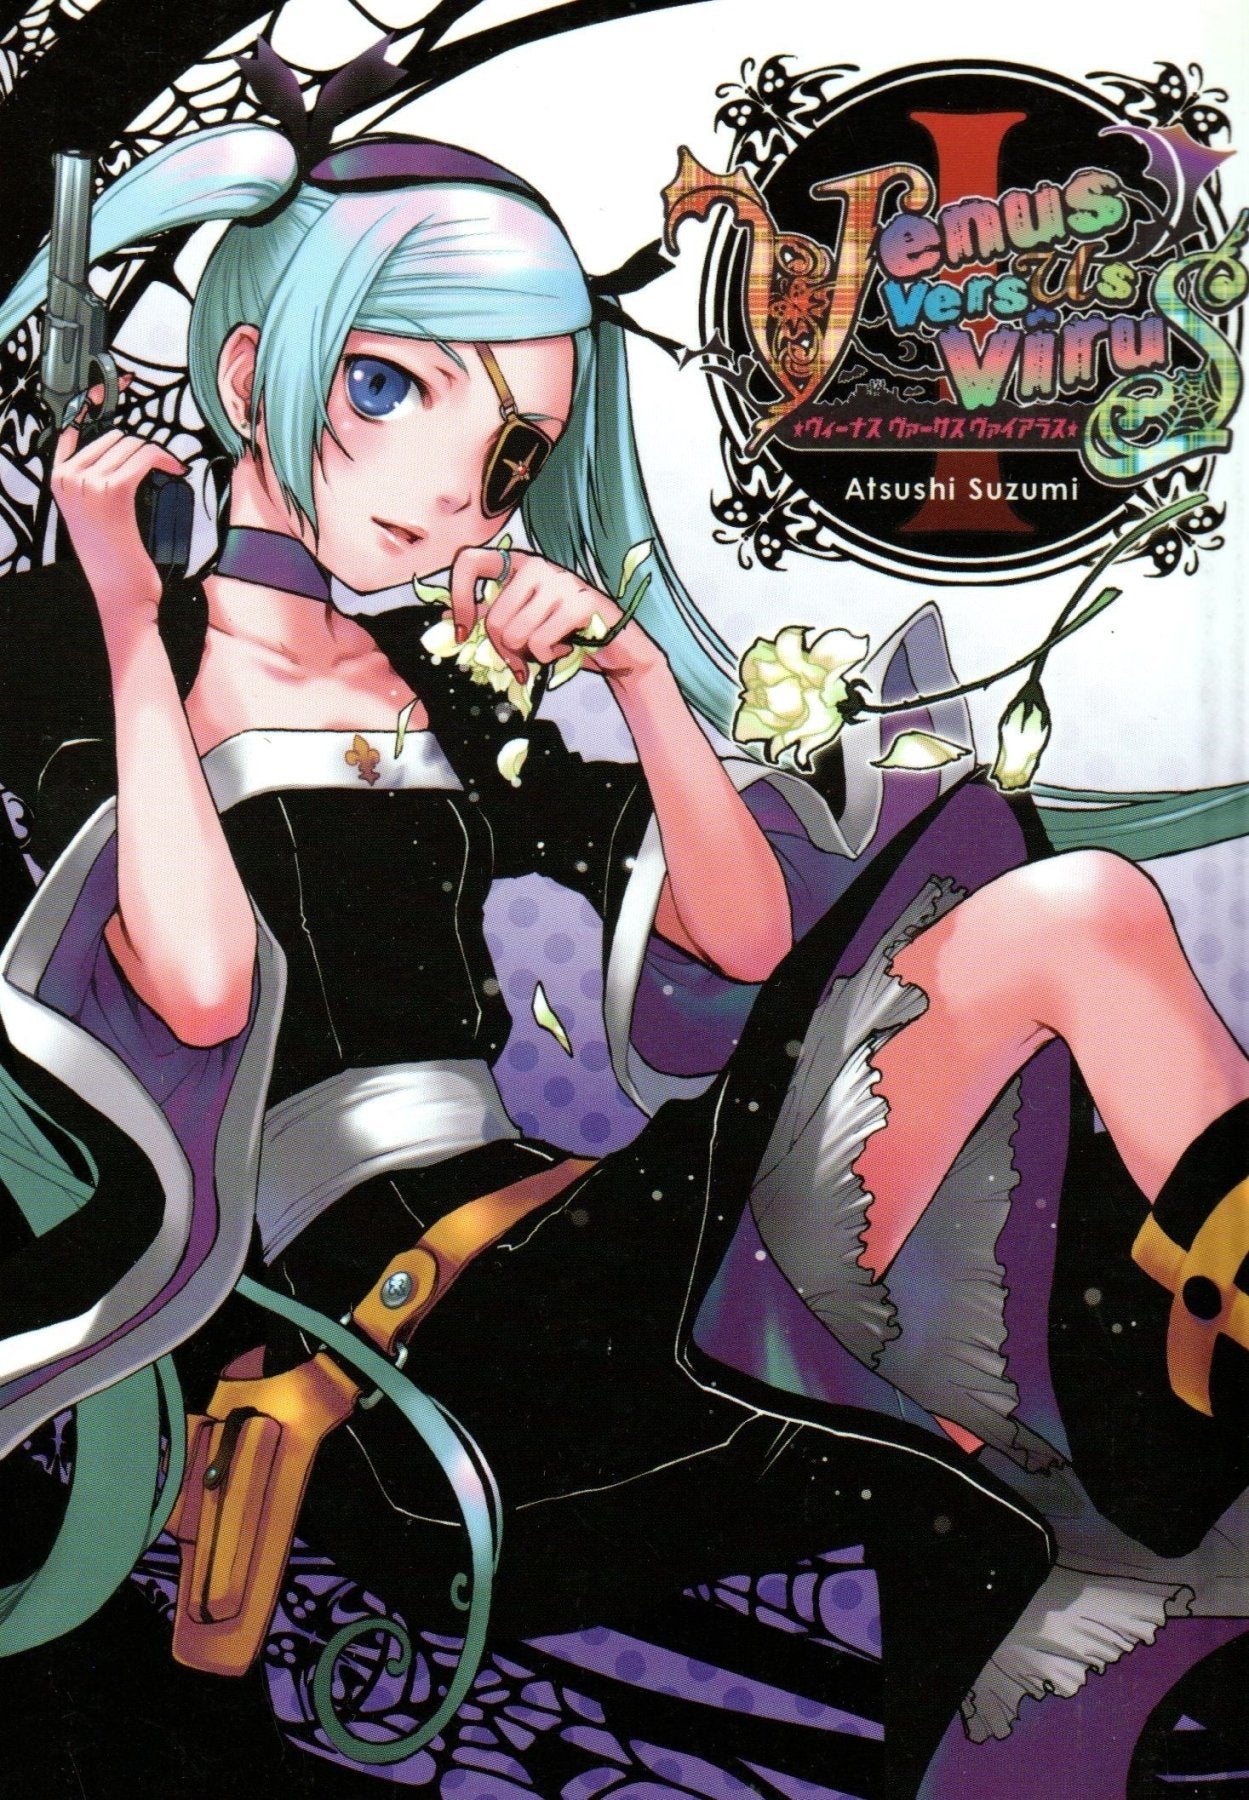 Venus Versus Virus Vol. 1 - Manga - Retro Island Gaming